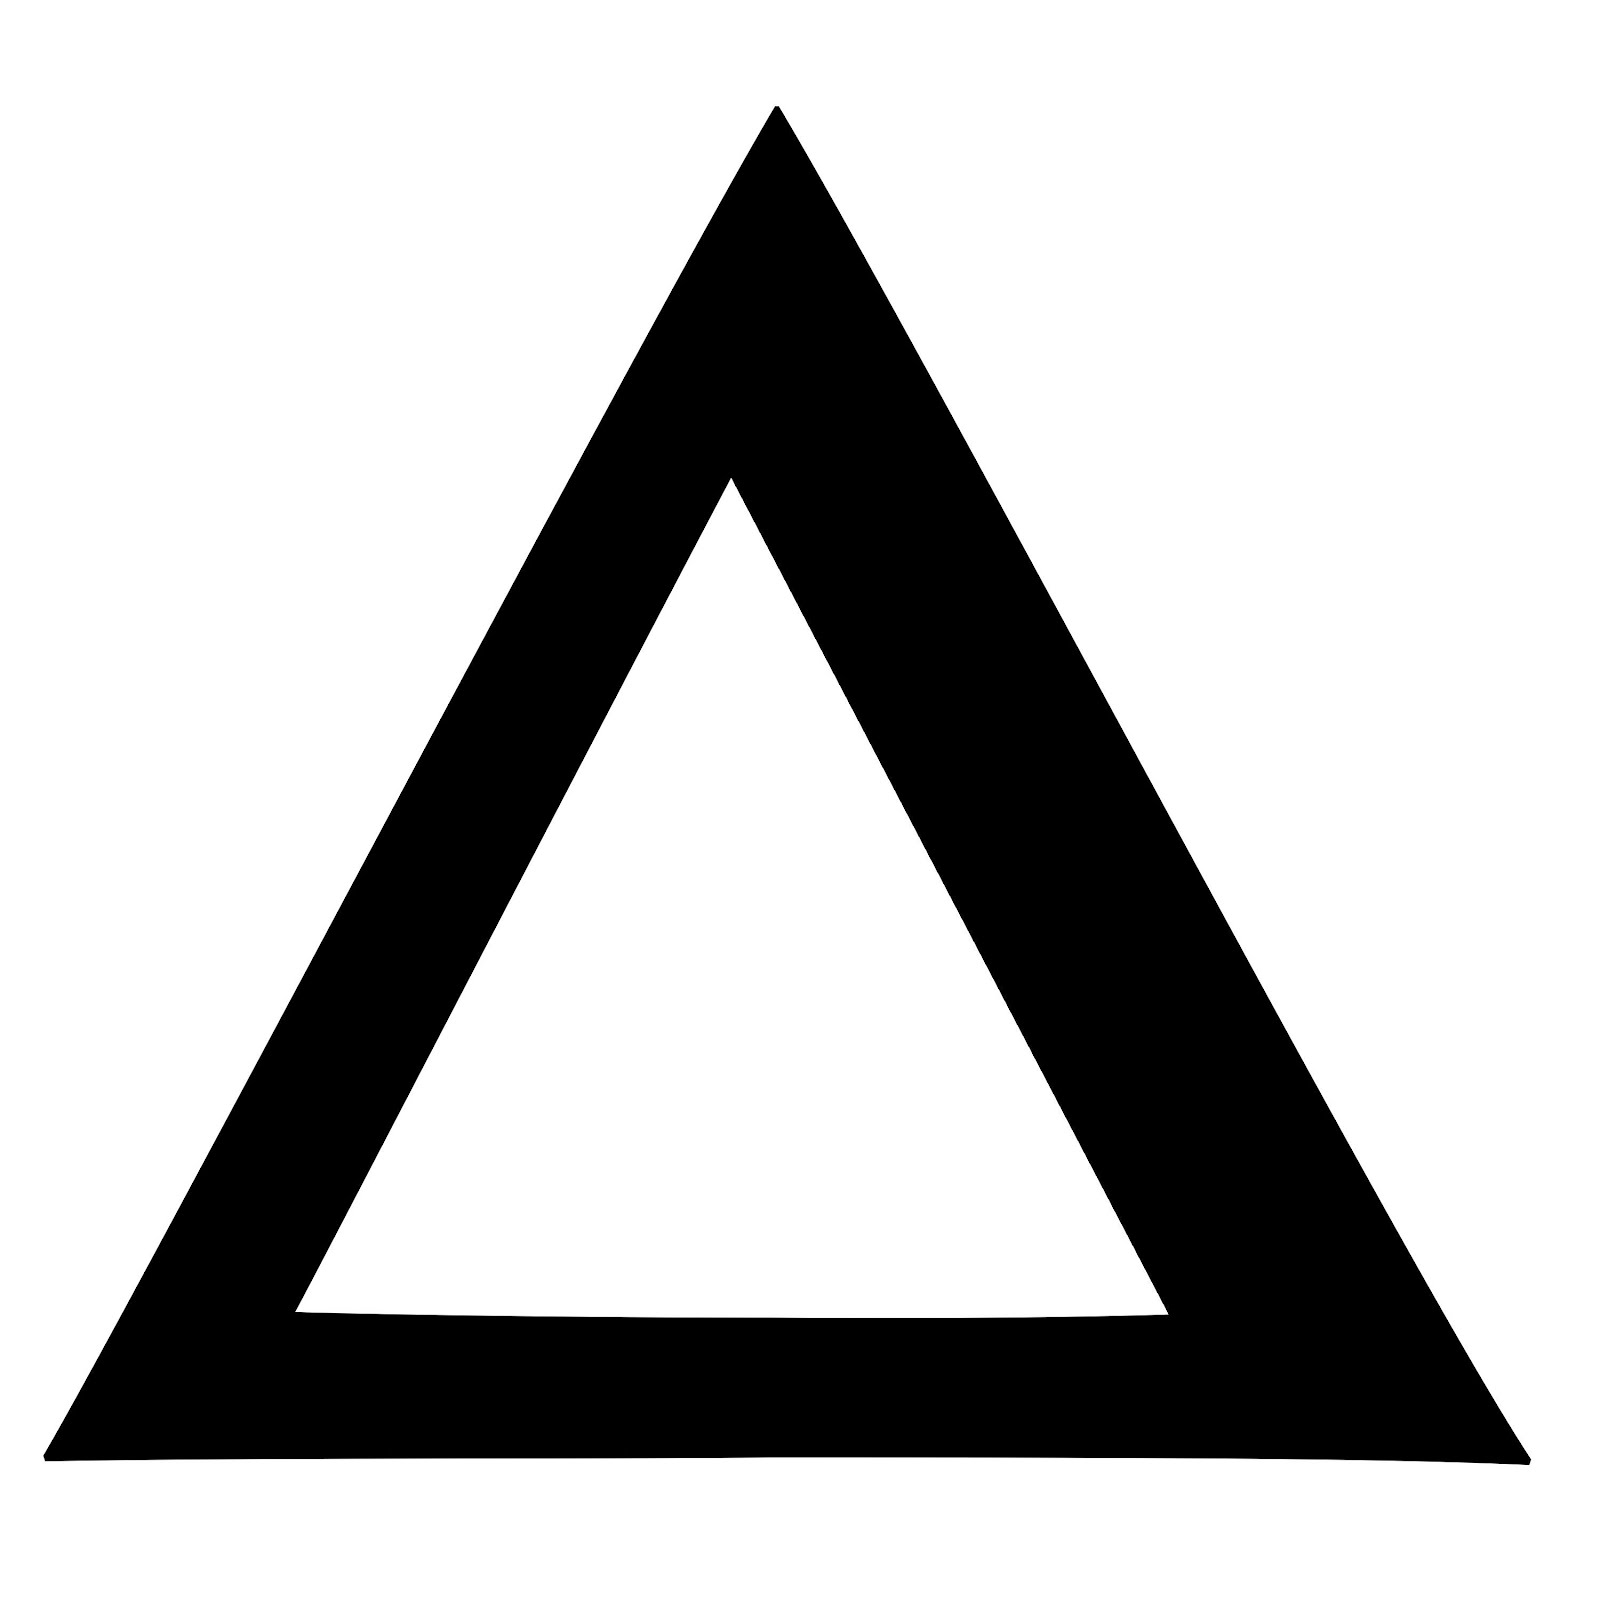 Треугольник символ. Дельта символ. Маленький треугольник символ. Черный треугольник символ. Дельта скопировать символ